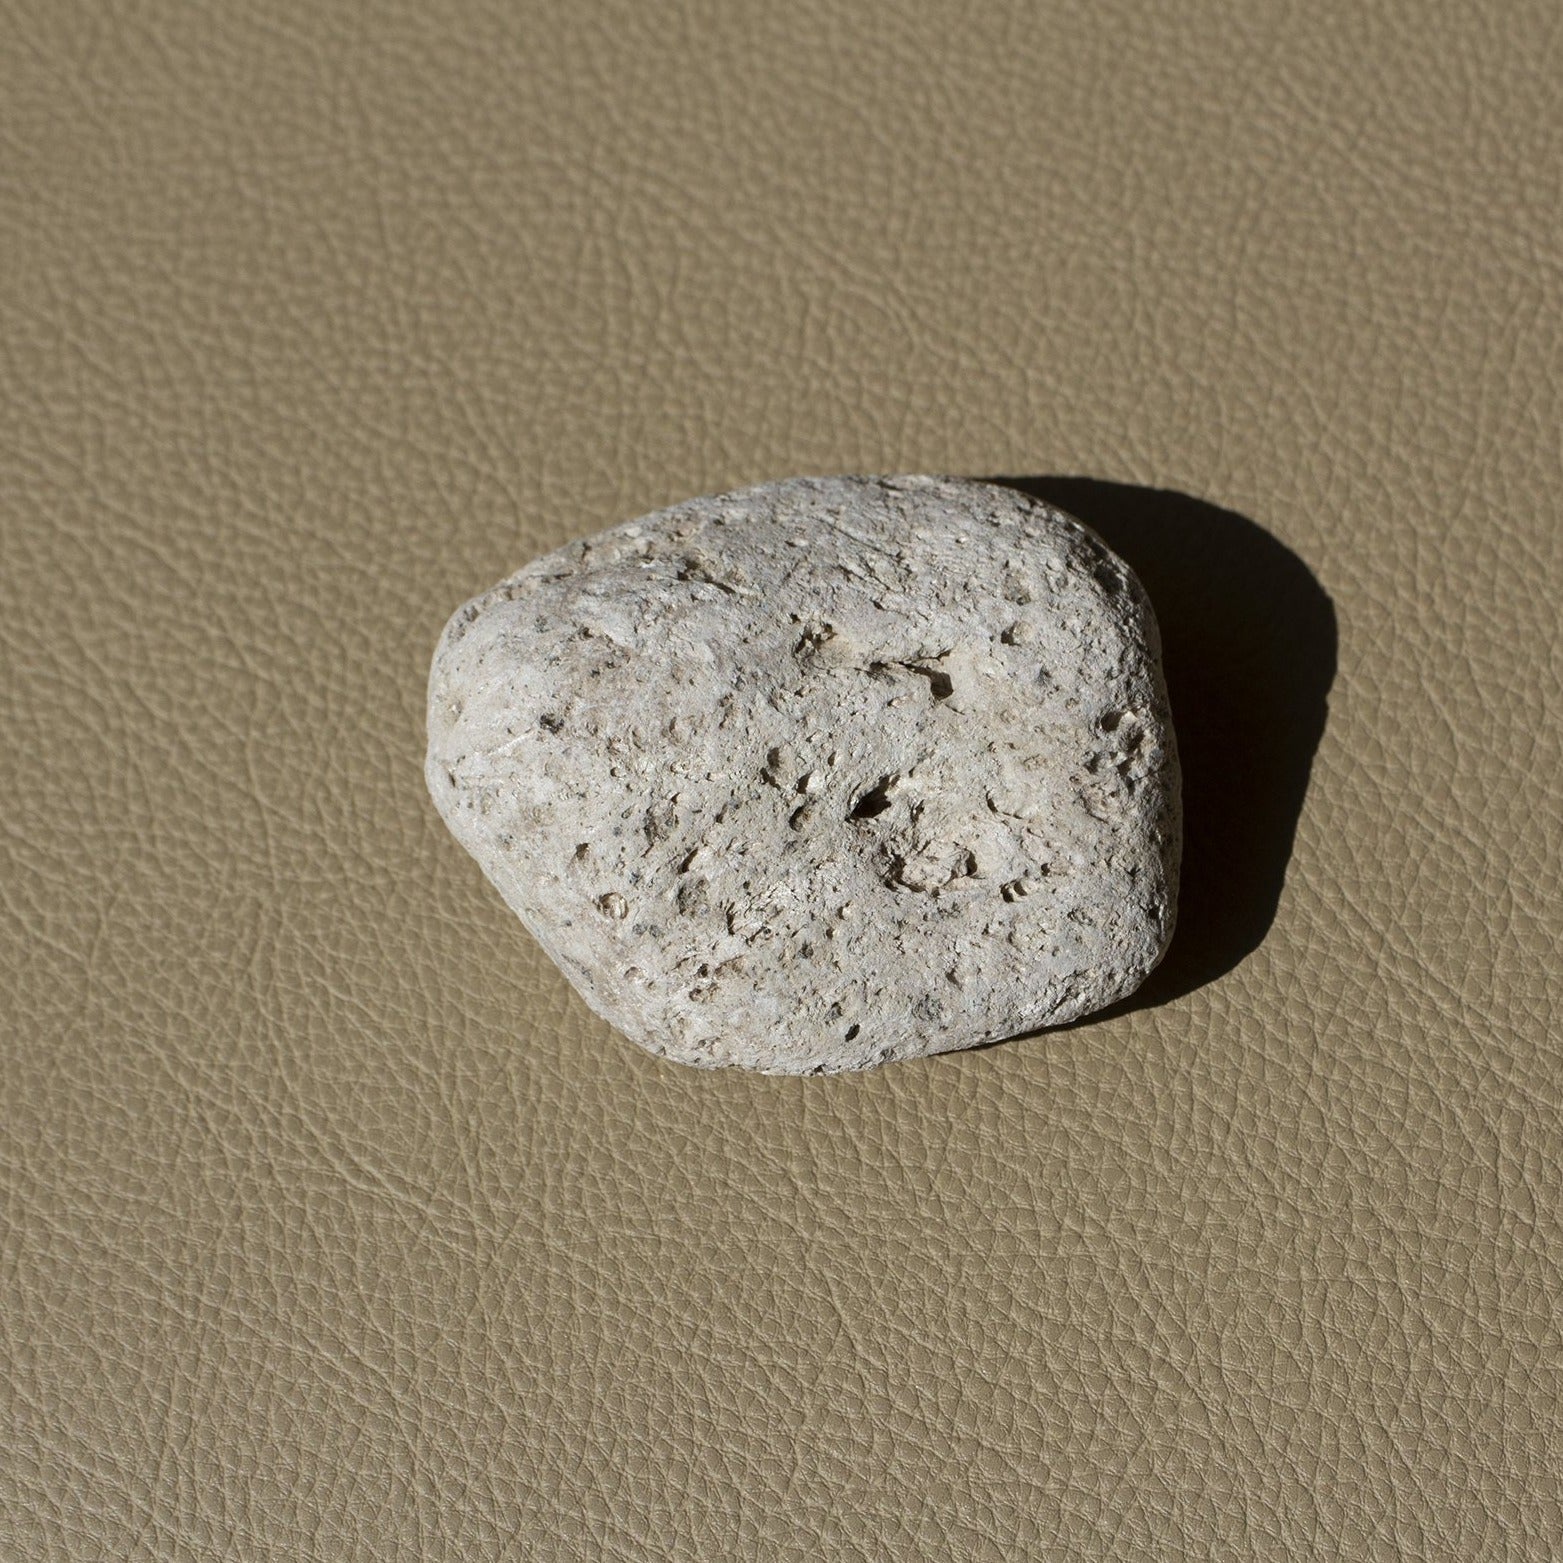 Natural Pumice Stone